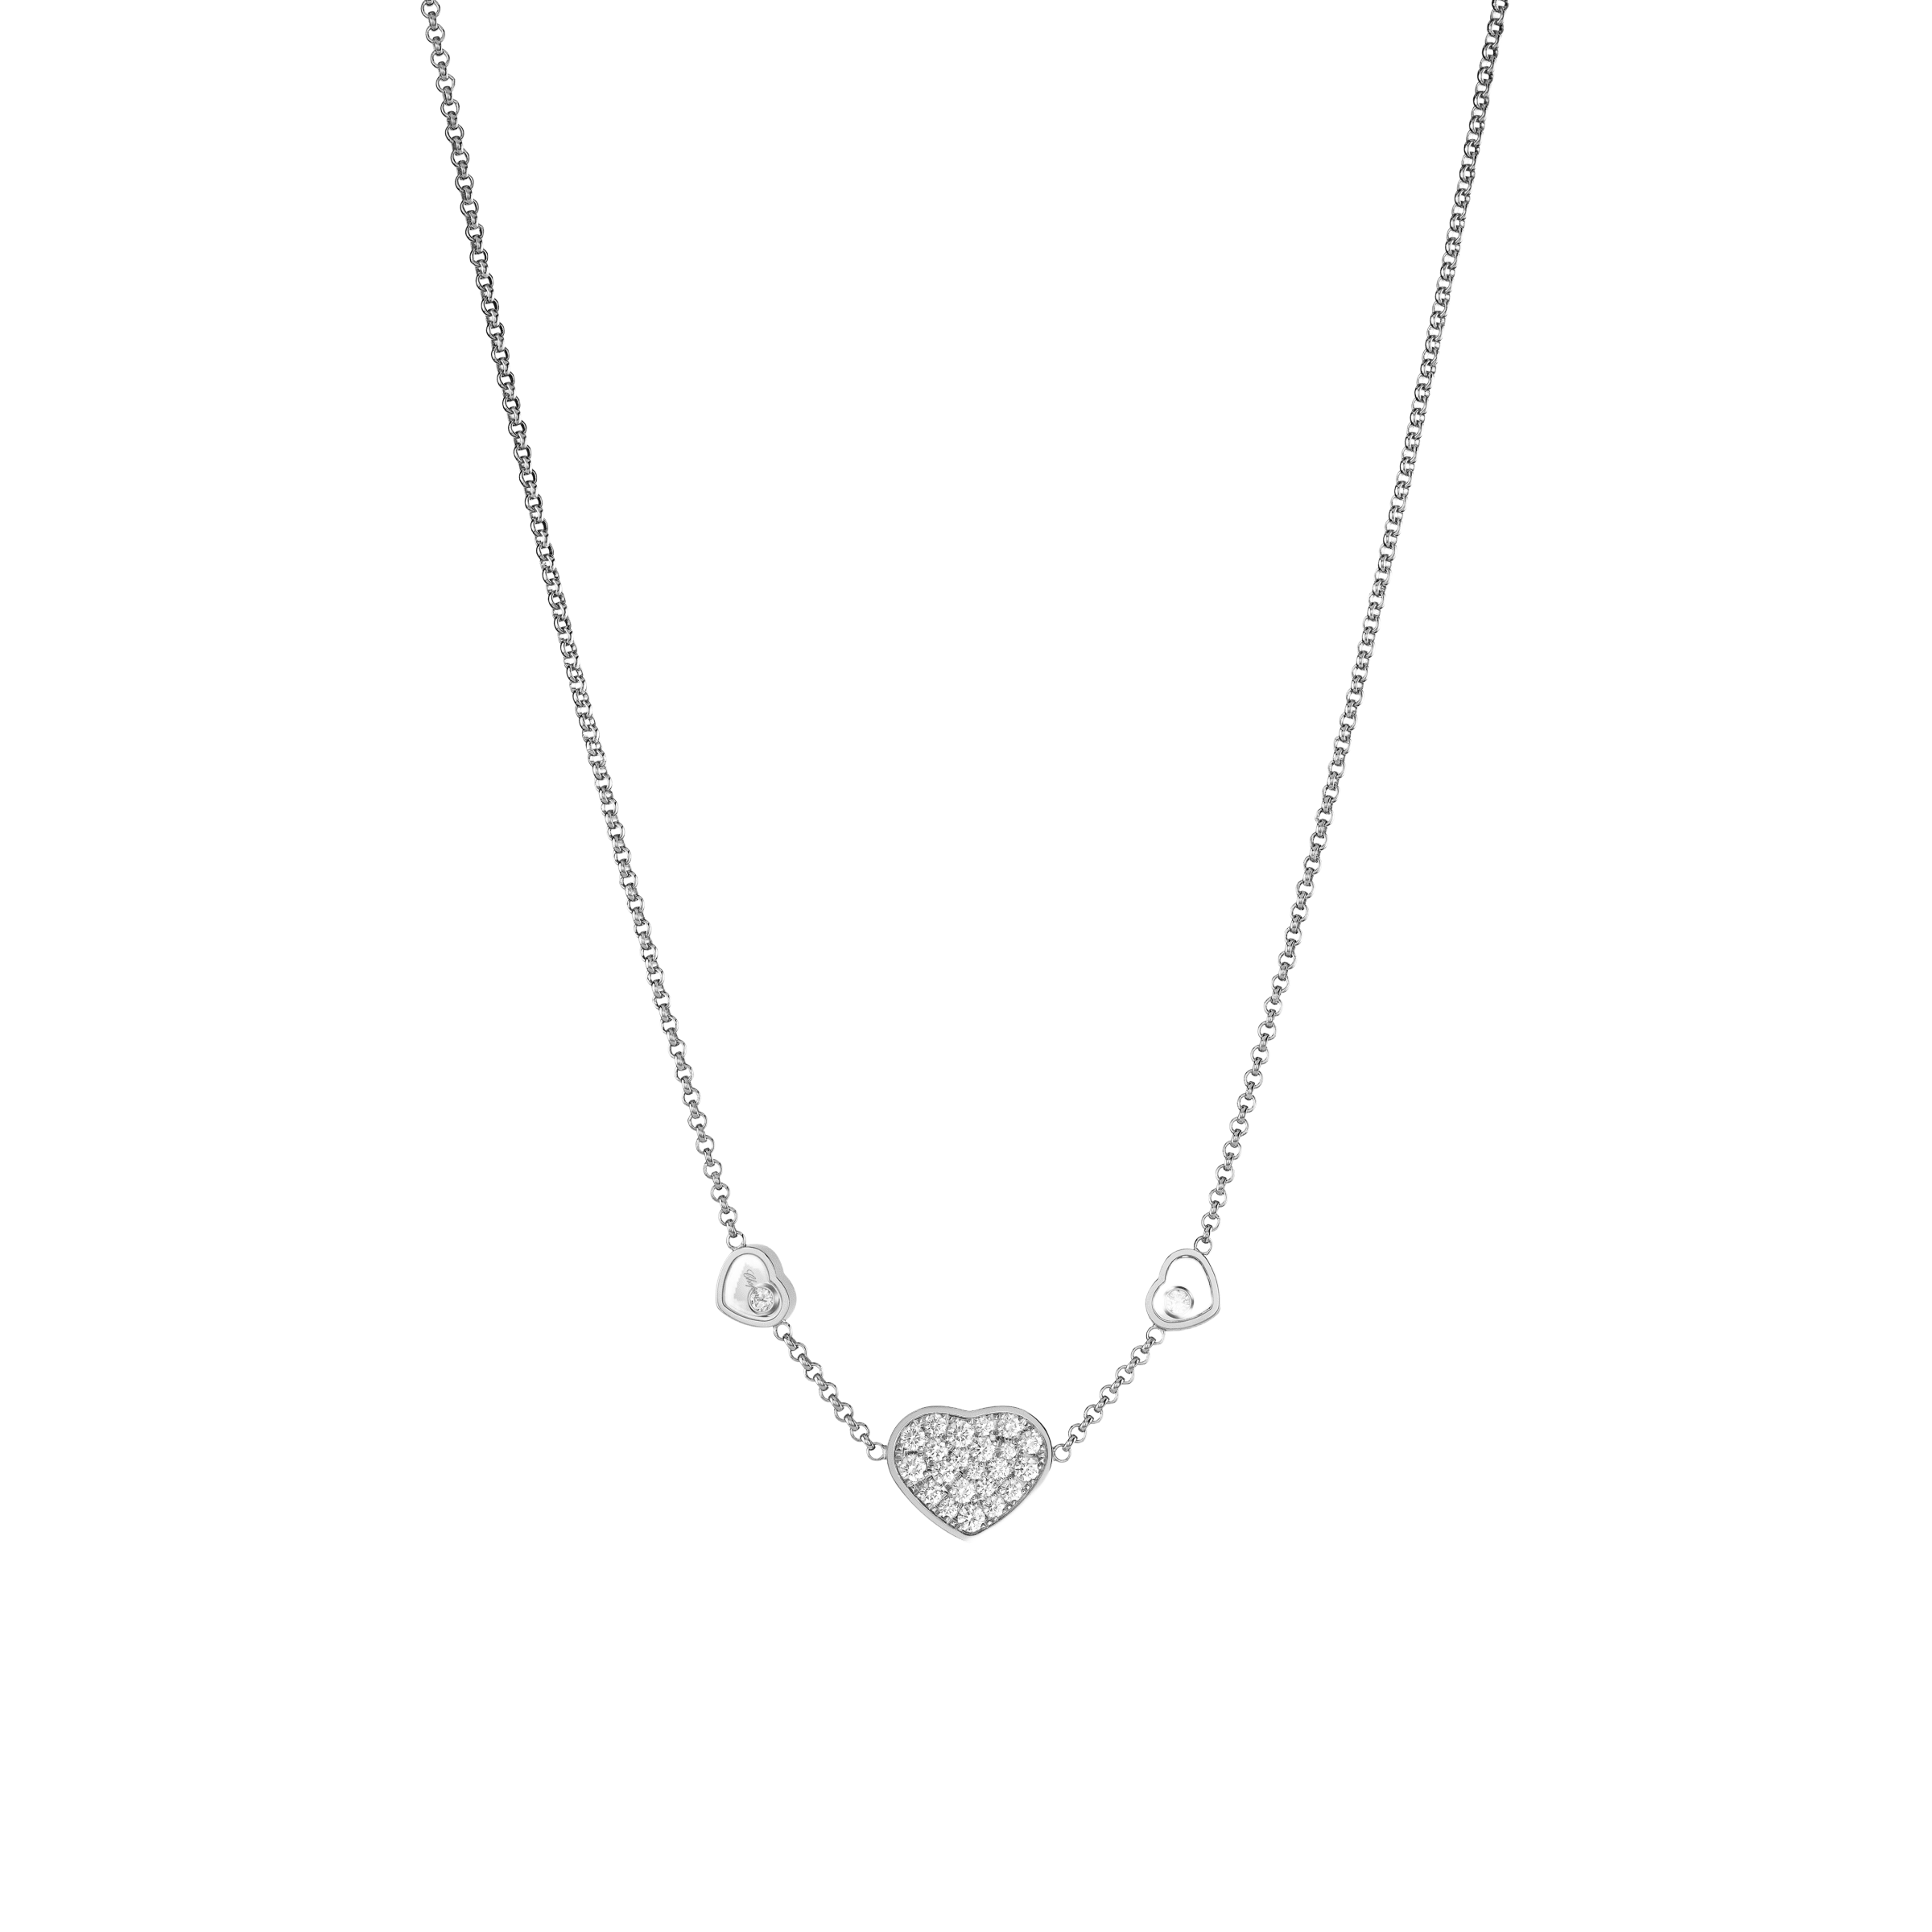  My Happy Hearts necklace1